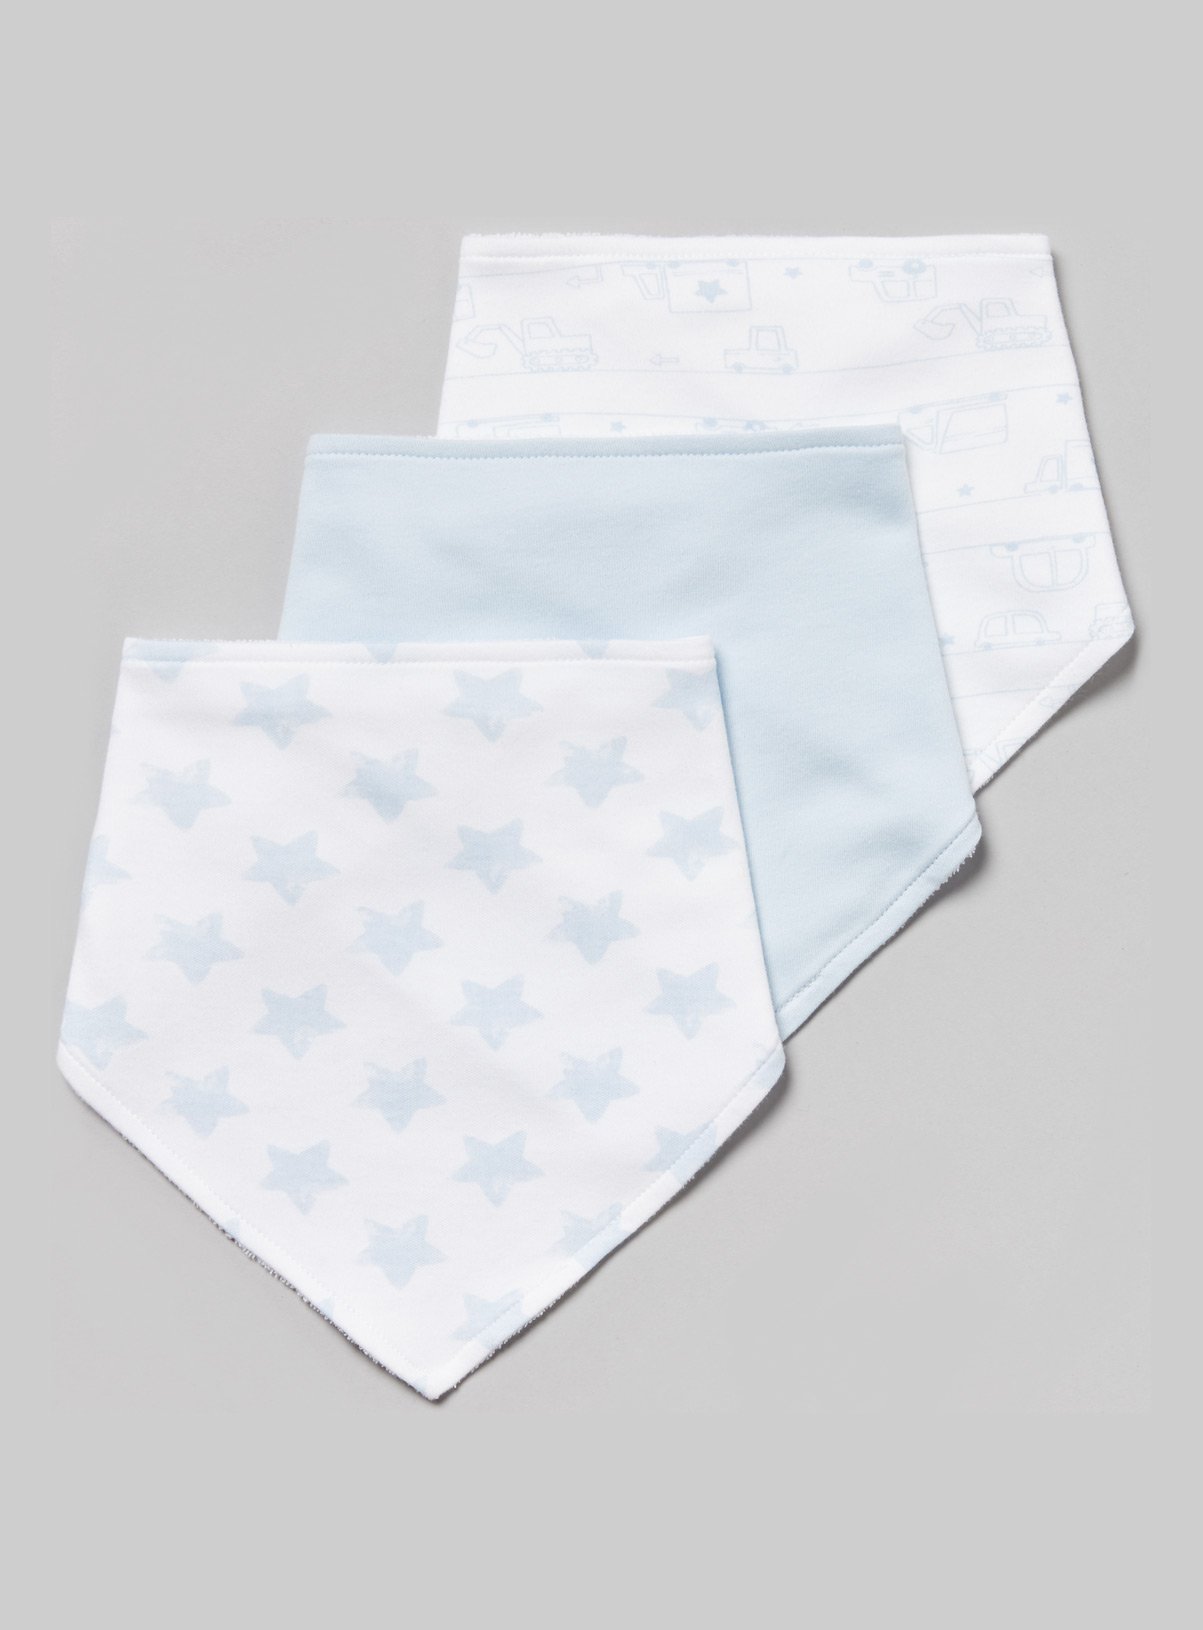 White & Blue Star Print Hanky Bibs 3 Pack Review